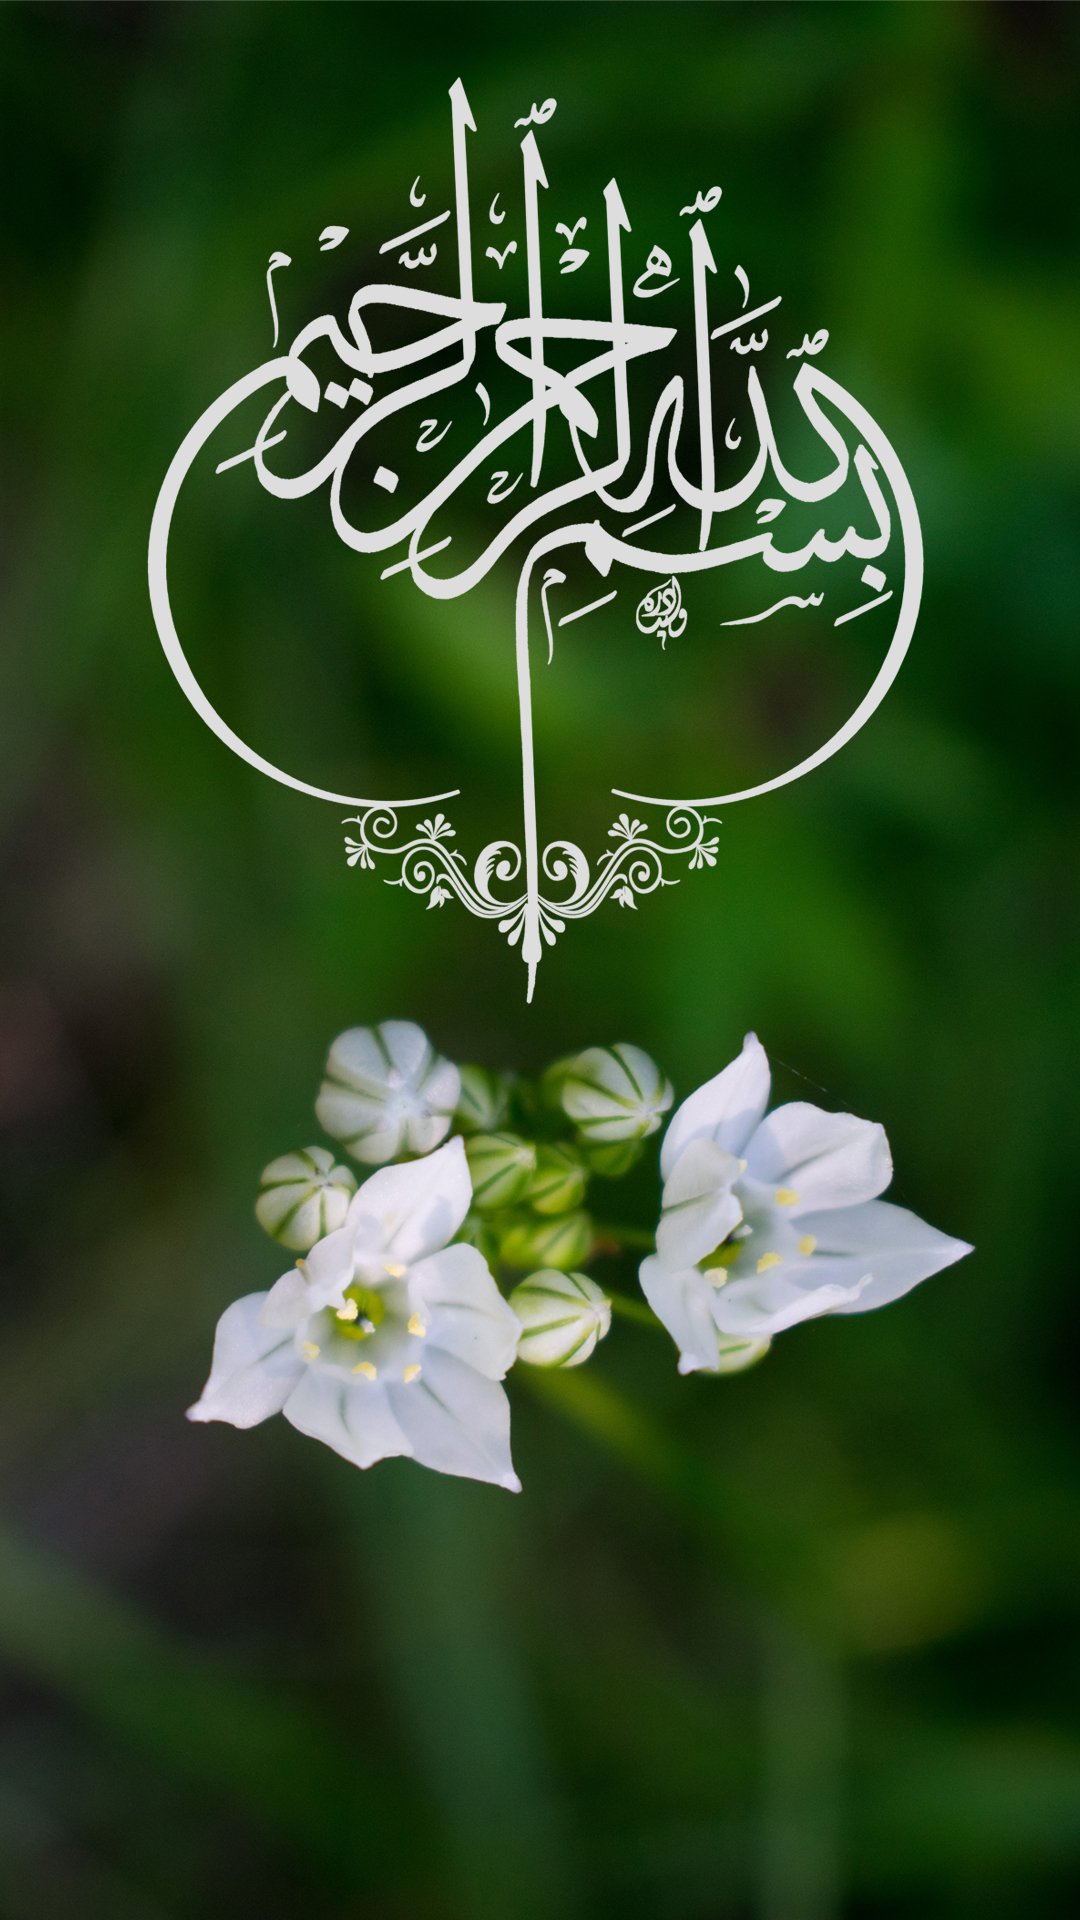 Beautiful Islamic Wallpapers Images  Humaira khan 1329838295 on  ShareChat